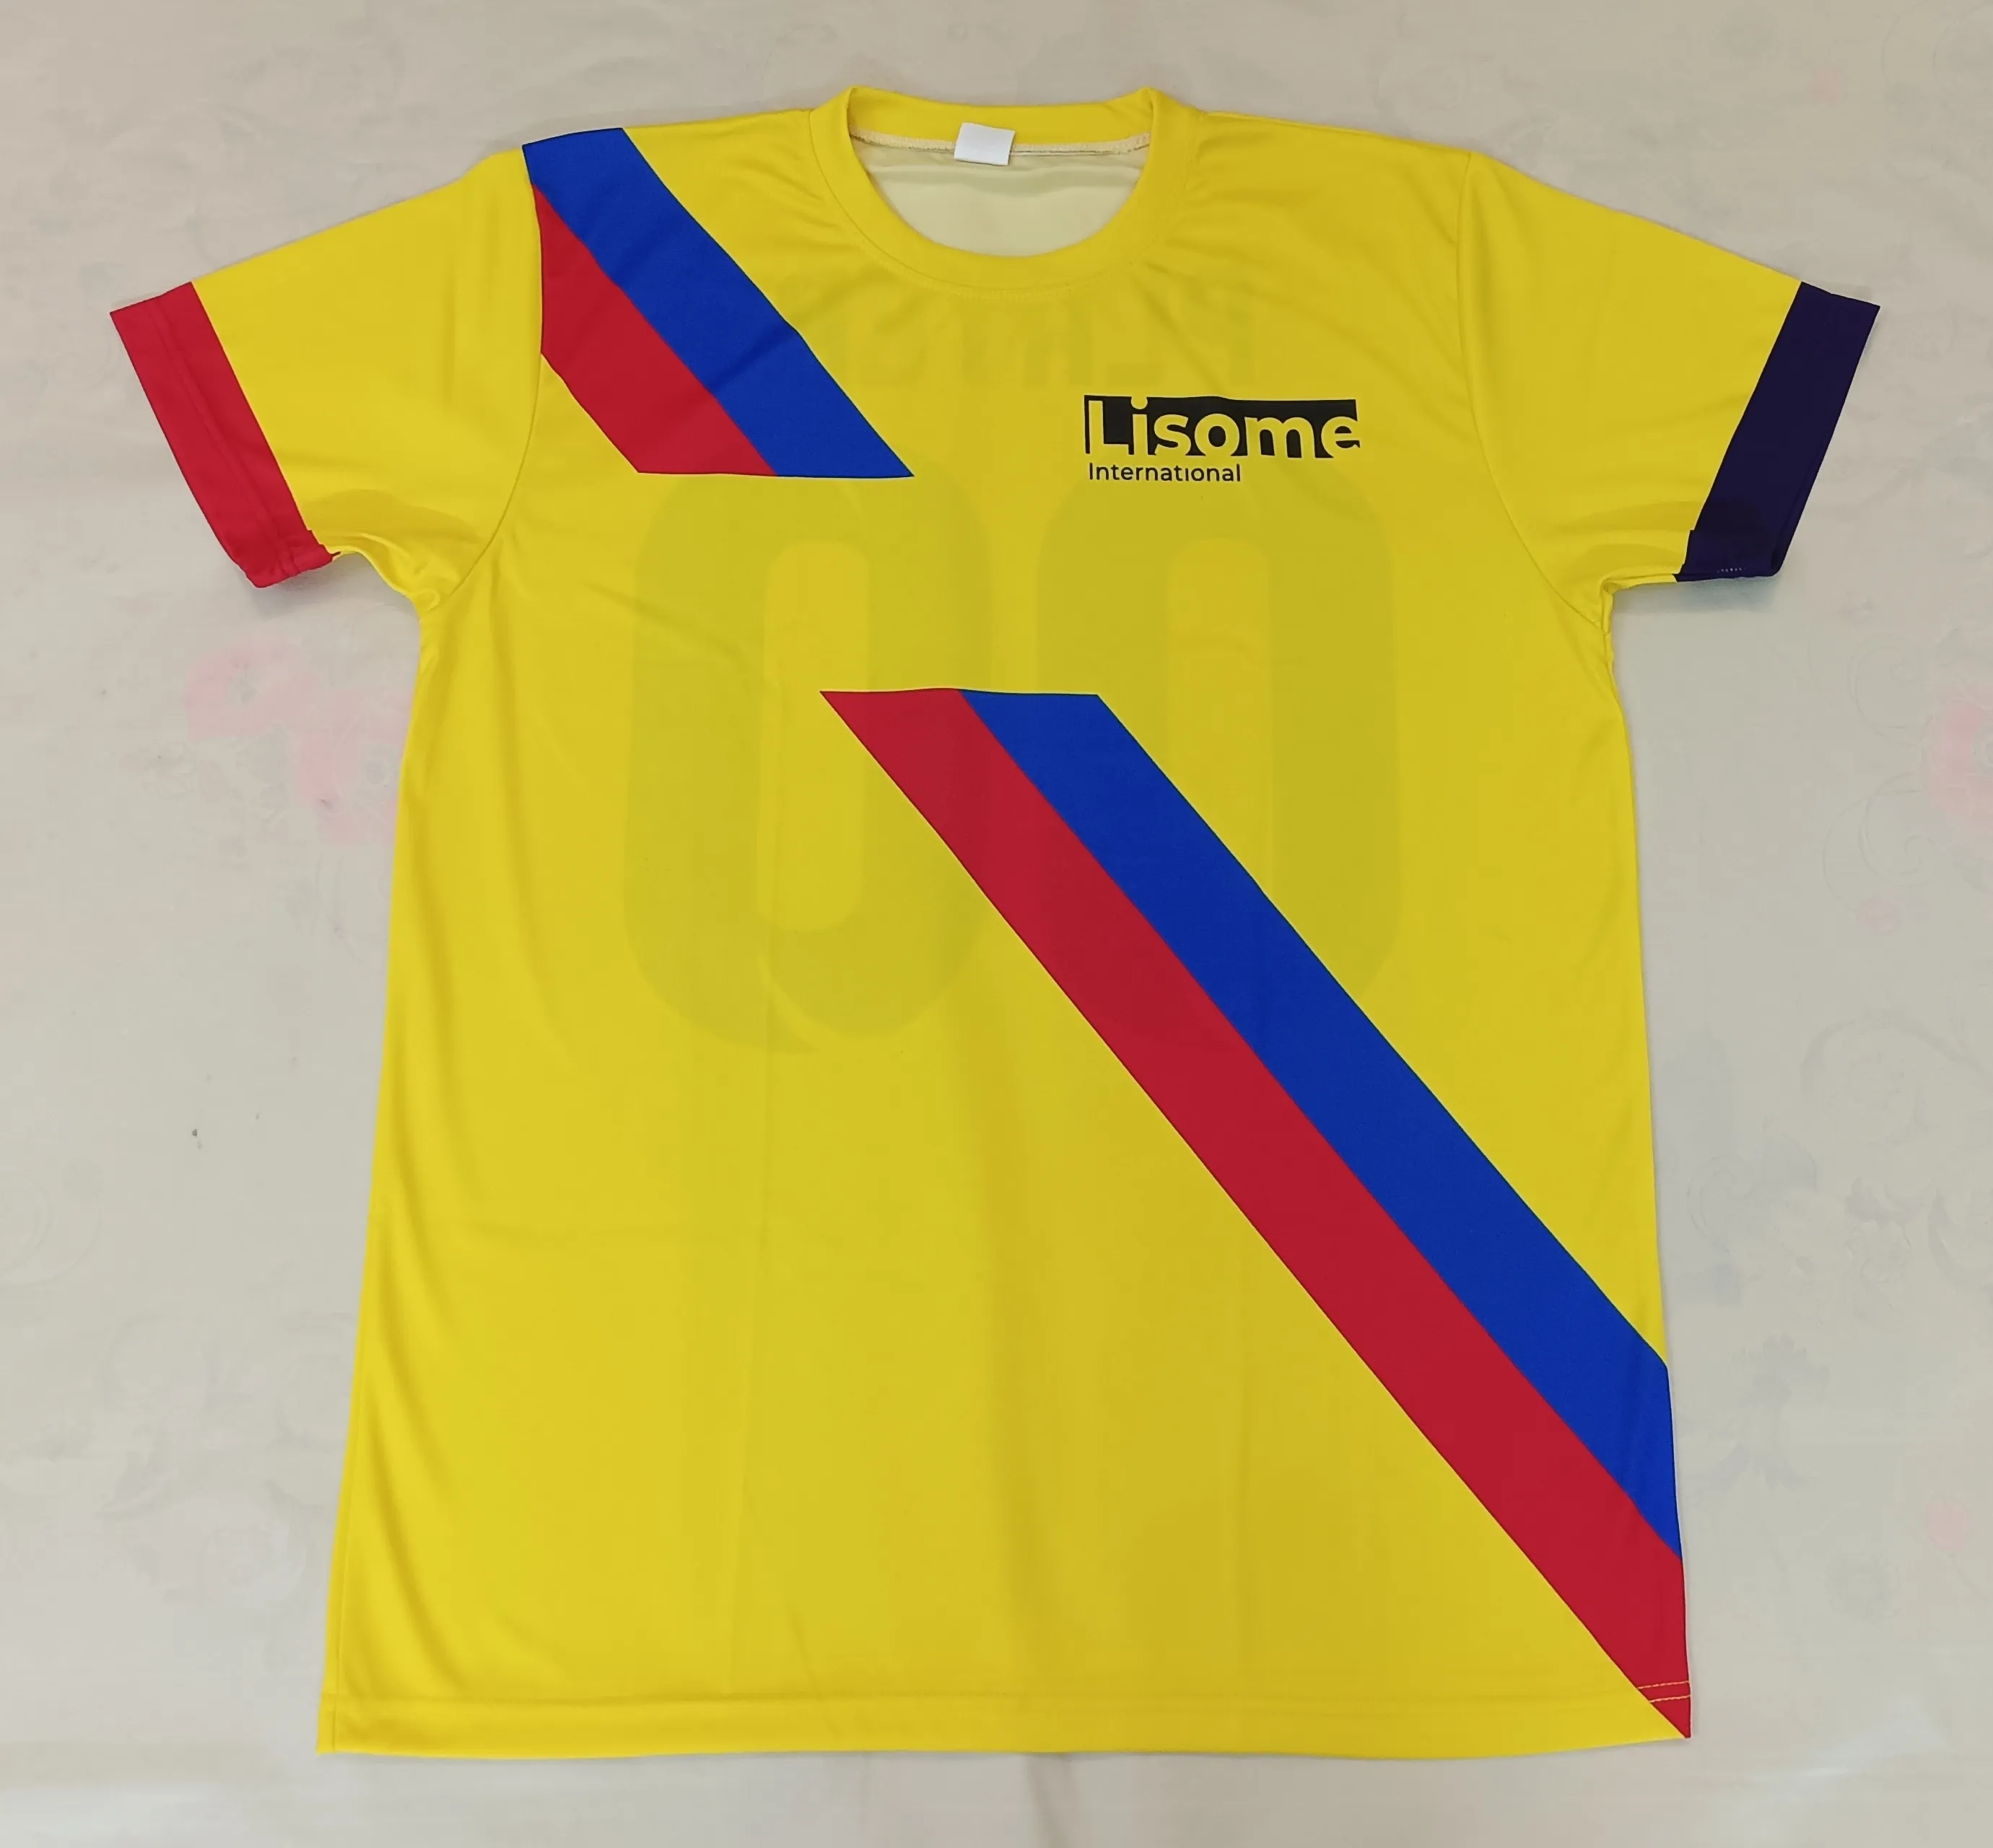 Men's Polyester T-Shirt Digital Print Sublimation Cotton Tees Unisex Prime Quality Football Jerseys Street Fashion Wear